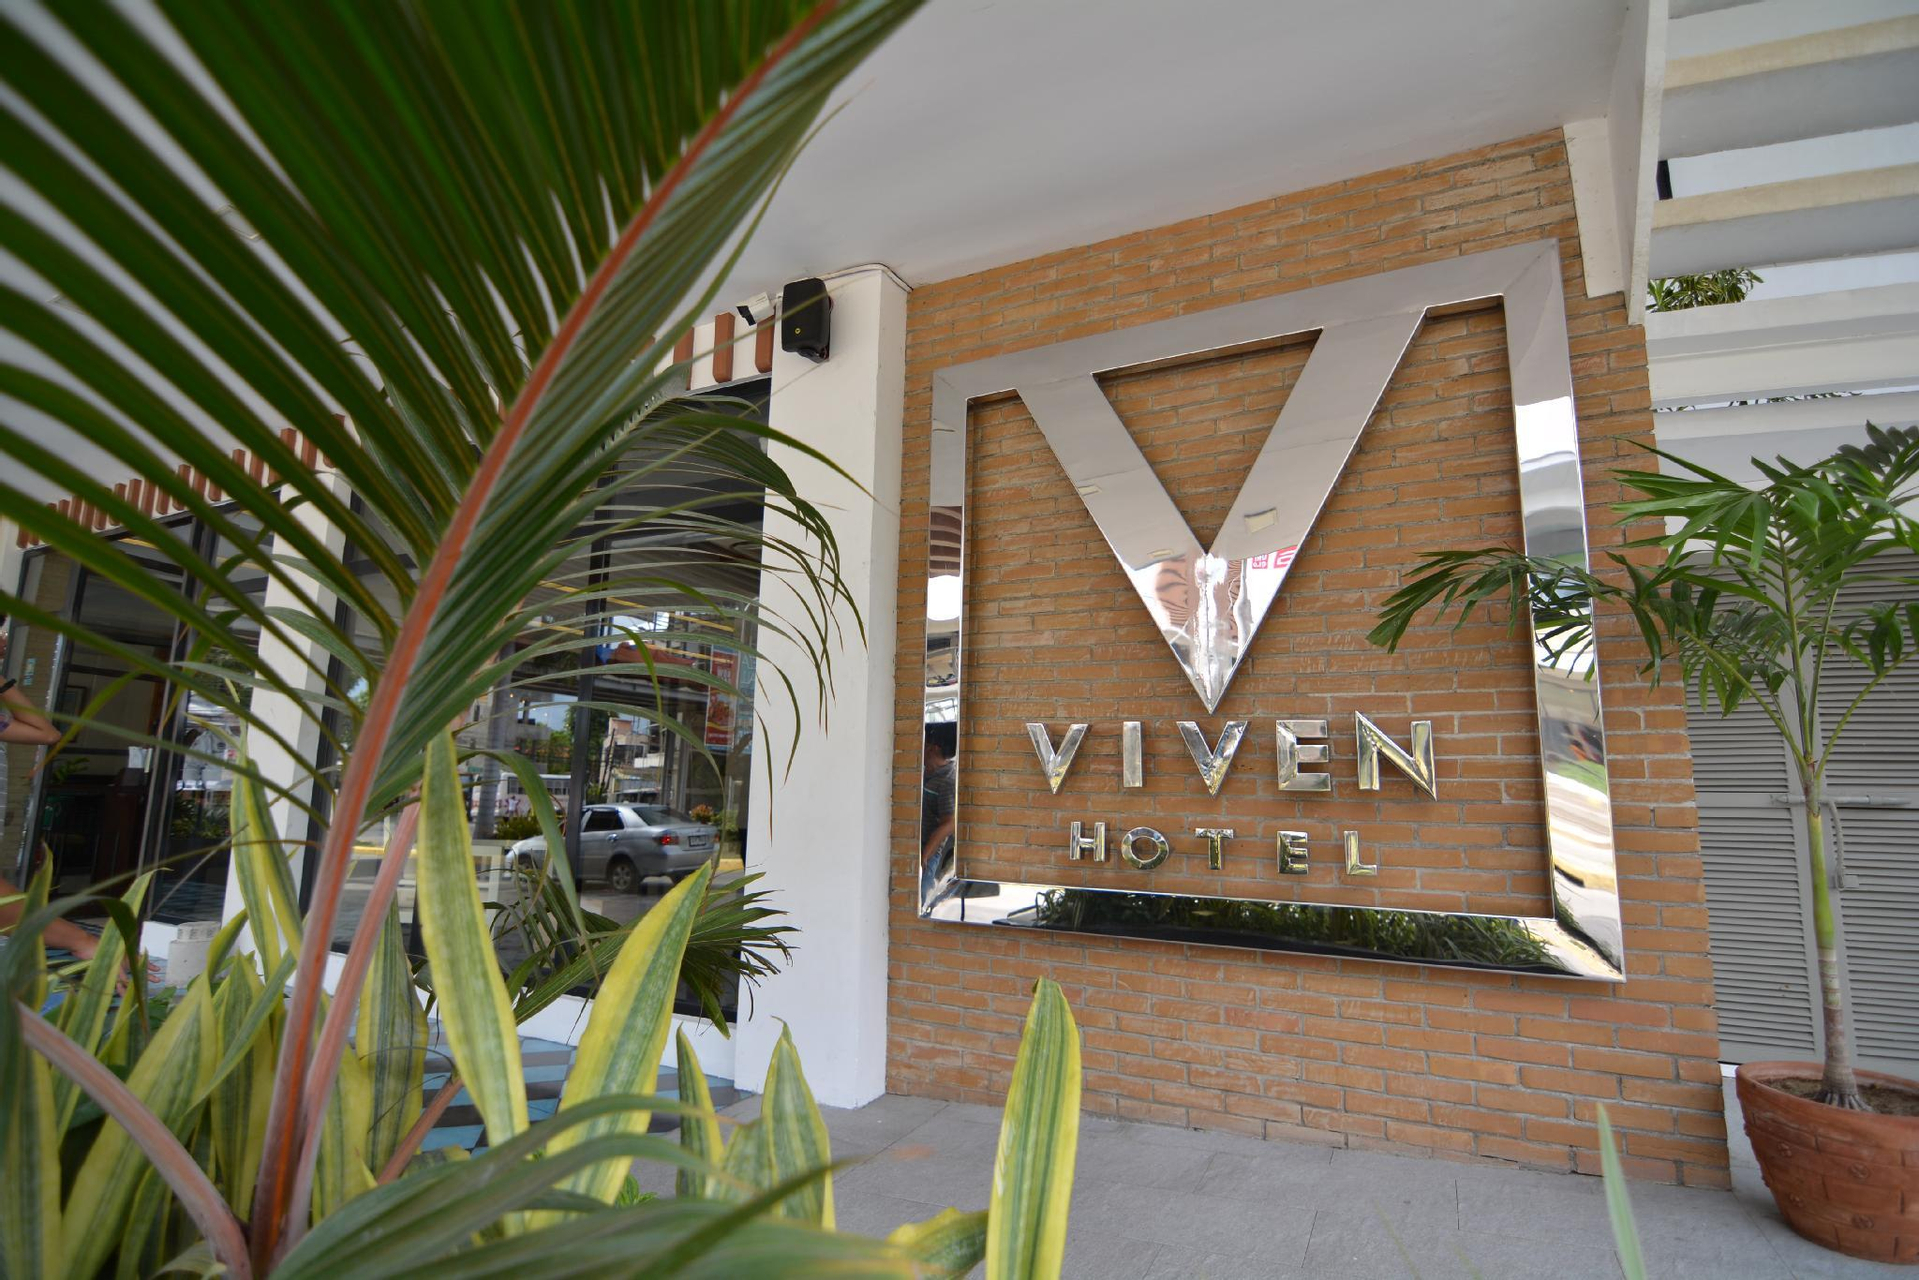 Exterior & Views 1, Viven Hotel, Laoag City